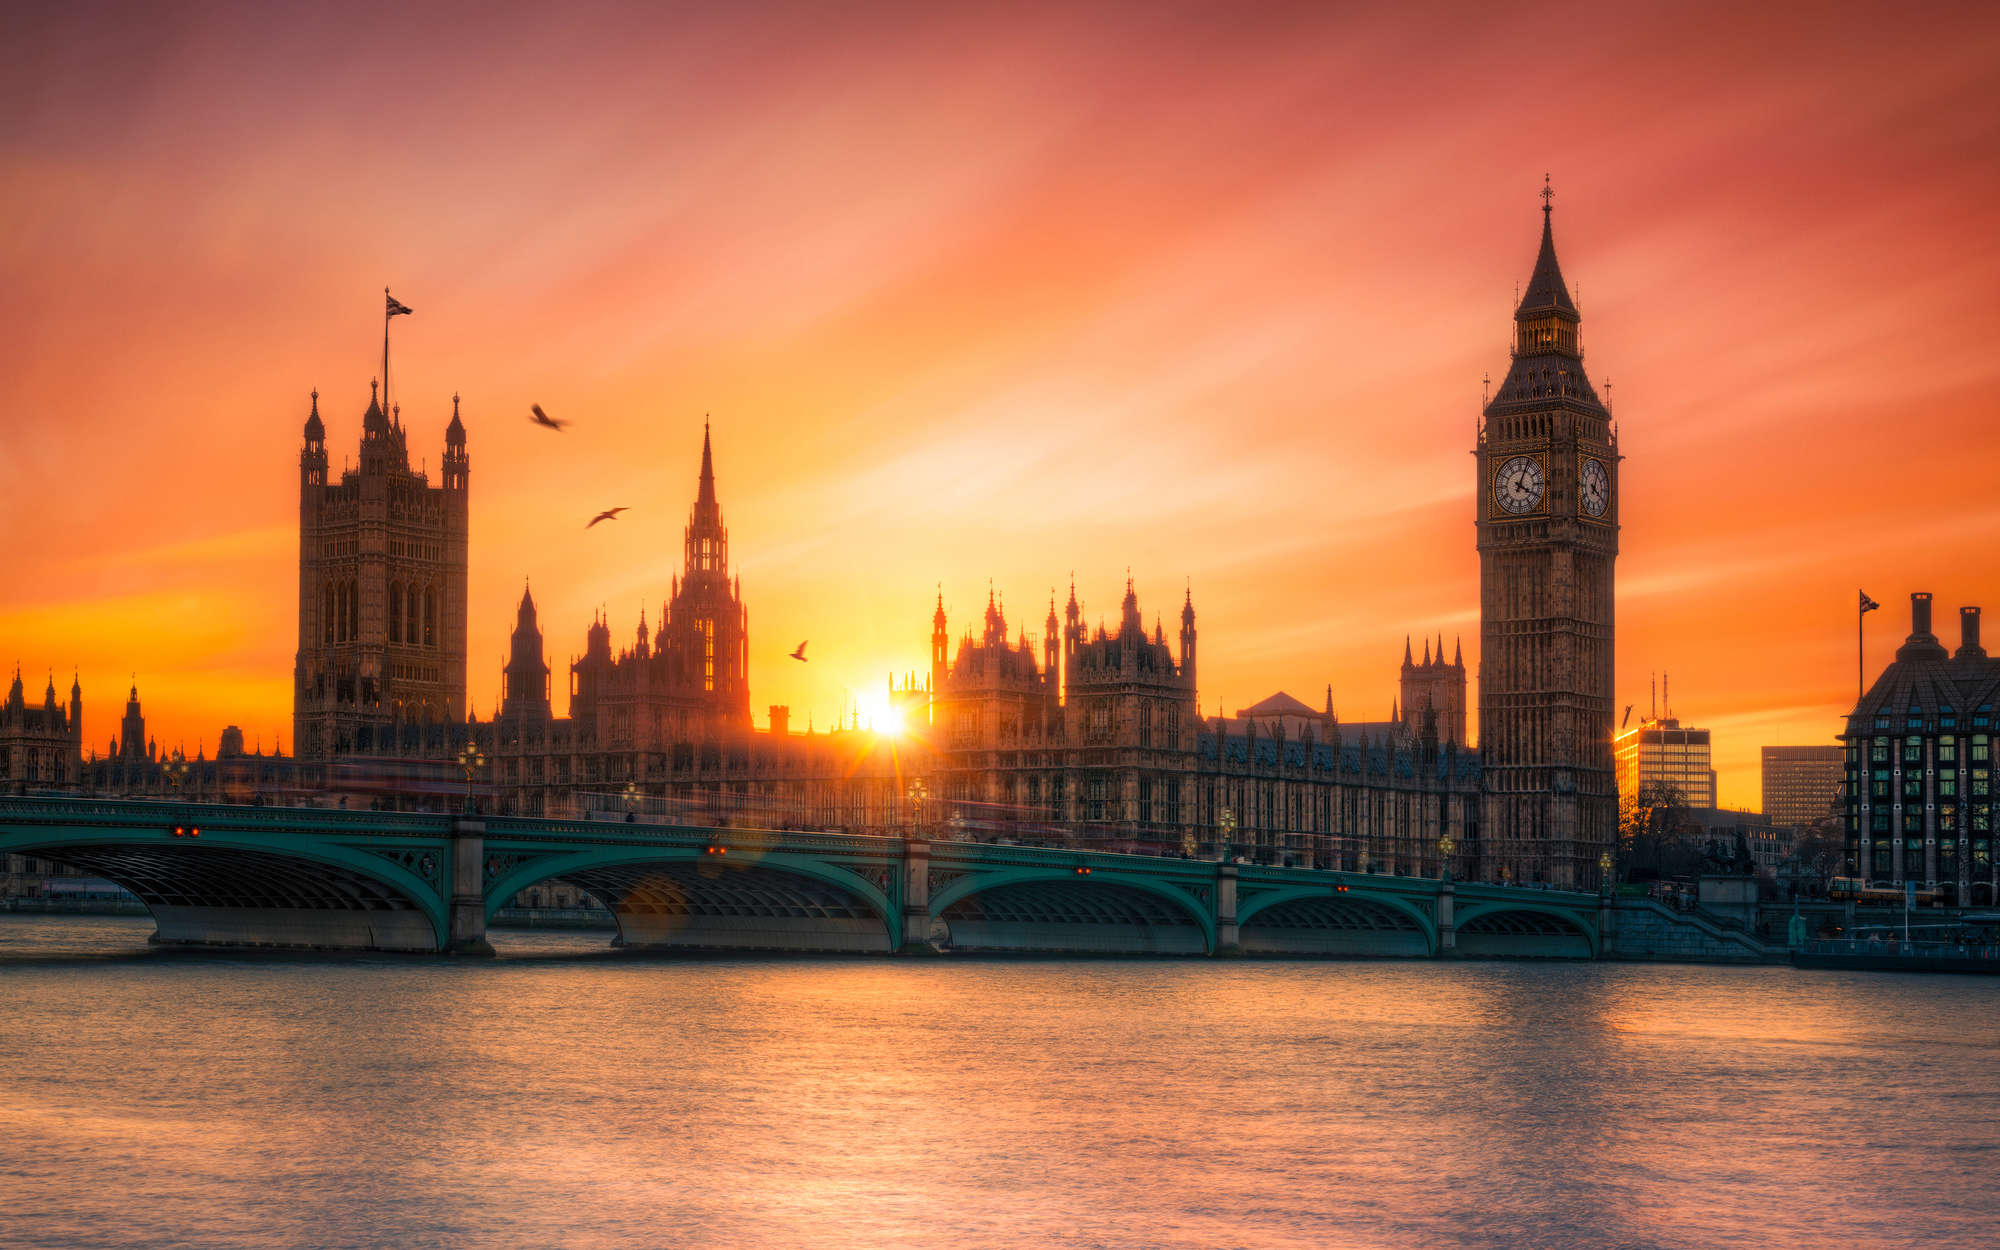             Digital behang Londen skyline bij zonsondergang - parelmoer glad vlies
        